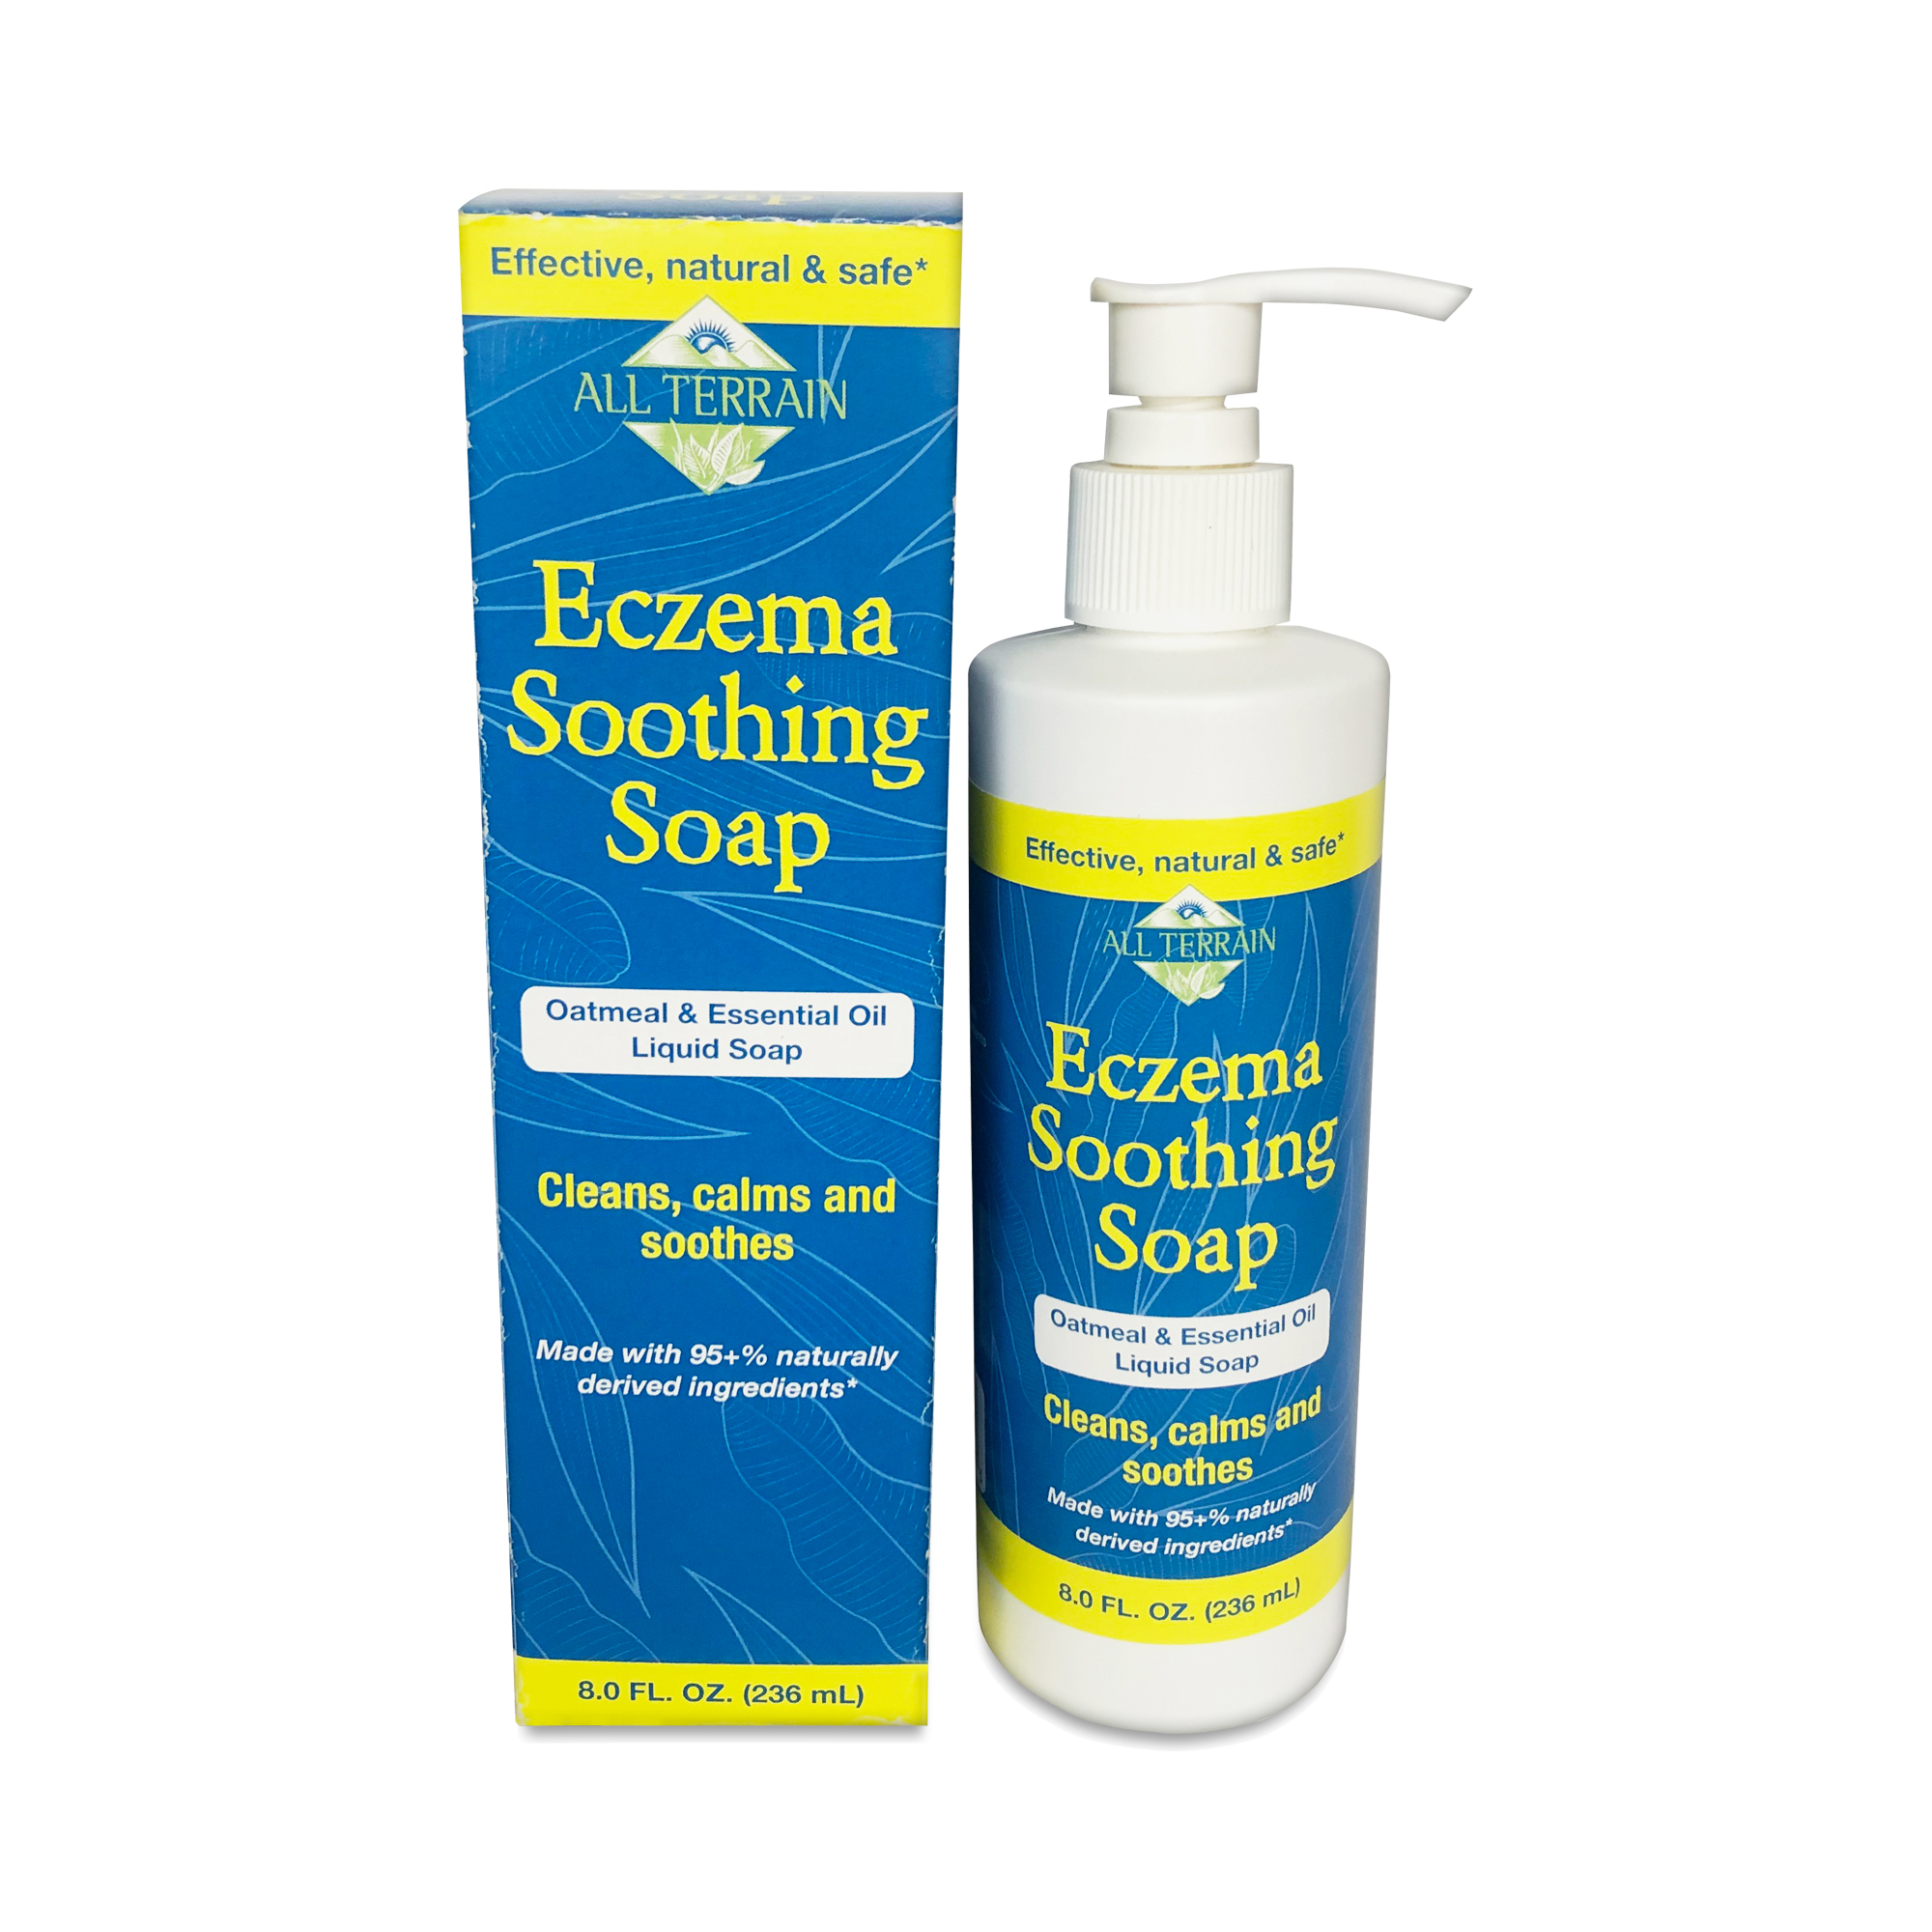 All Terrain Eczema Soothing Liquid Soap 8 oz bottle